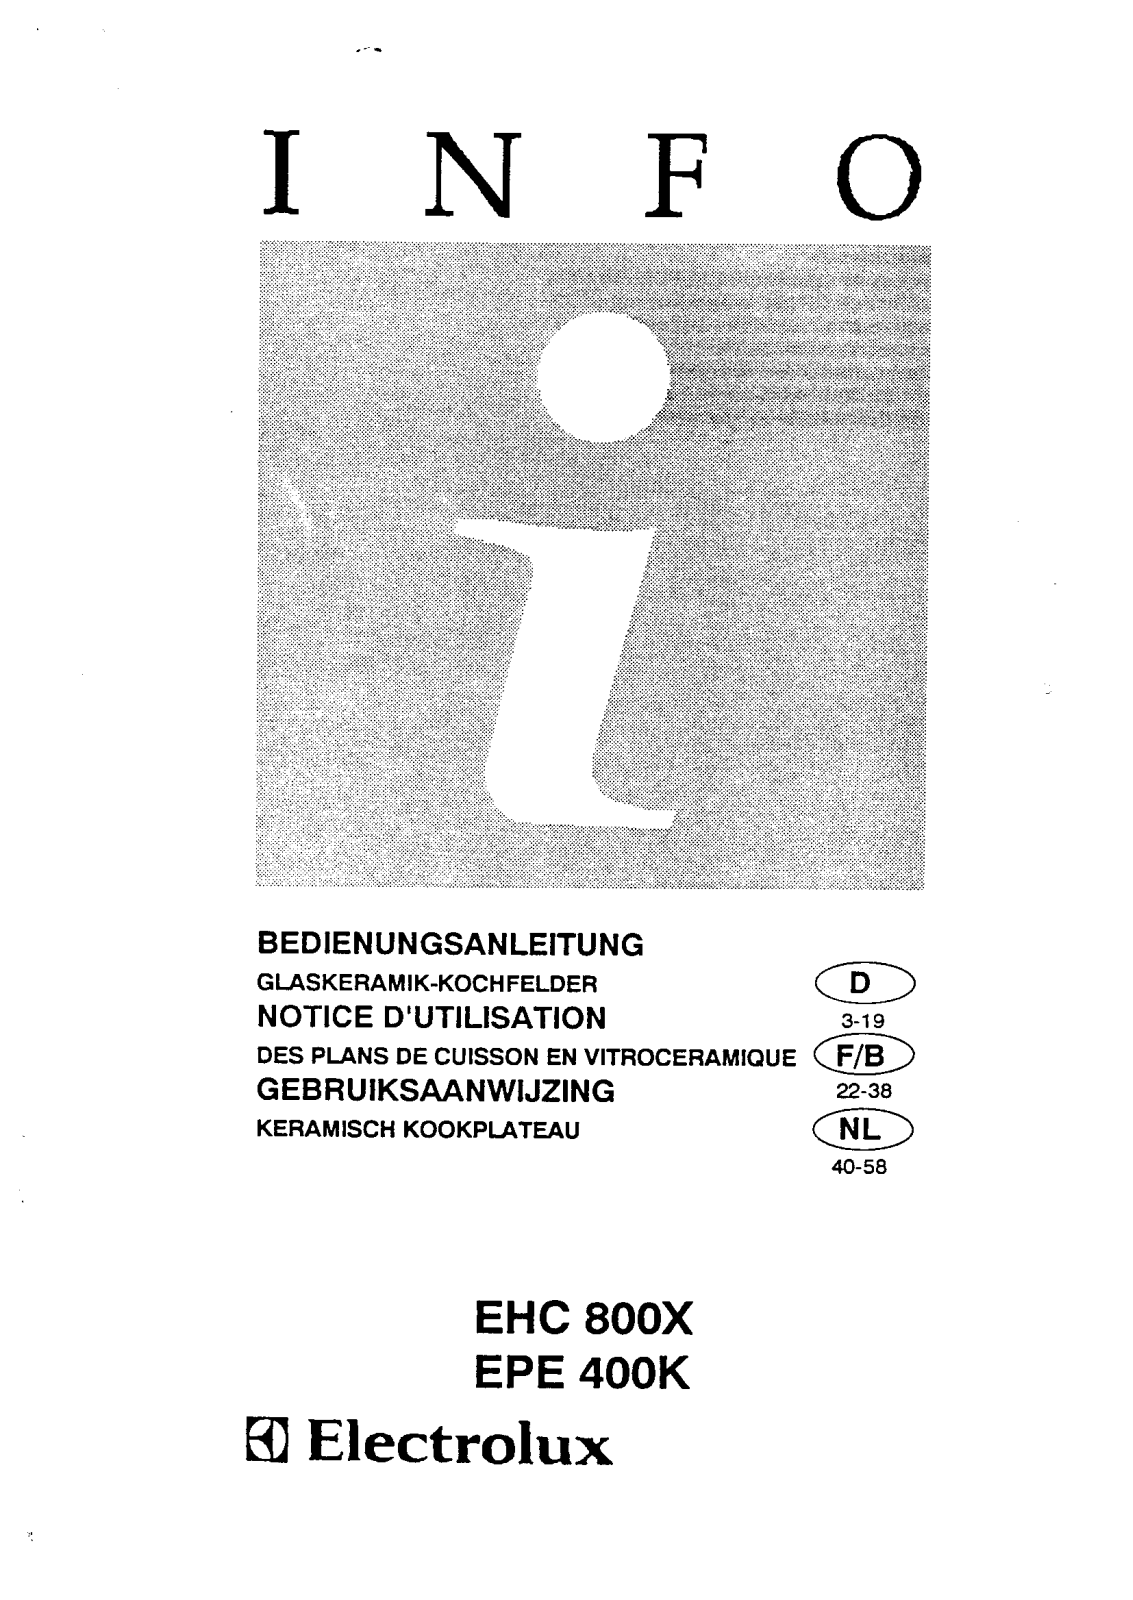 electrolux ehc800x, epe 400k User Manual